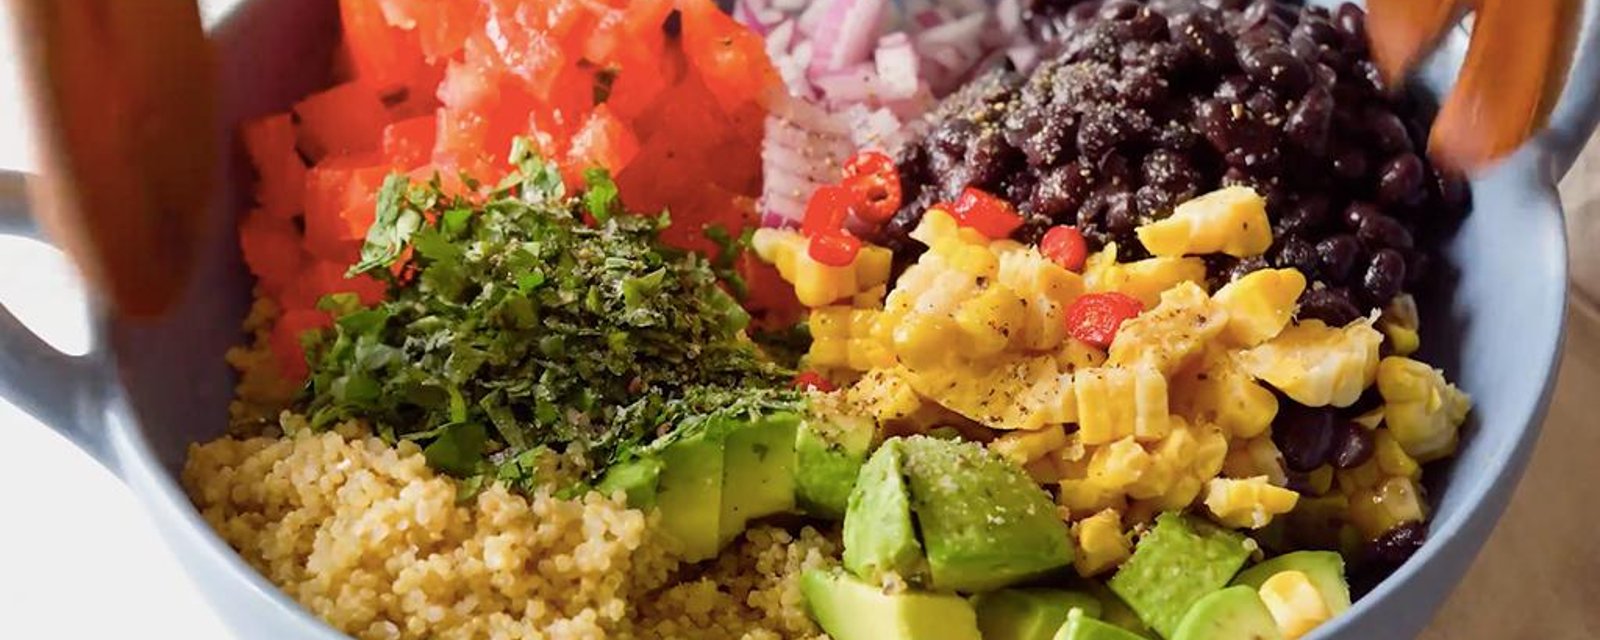 Salade festive de quinoa mexicain